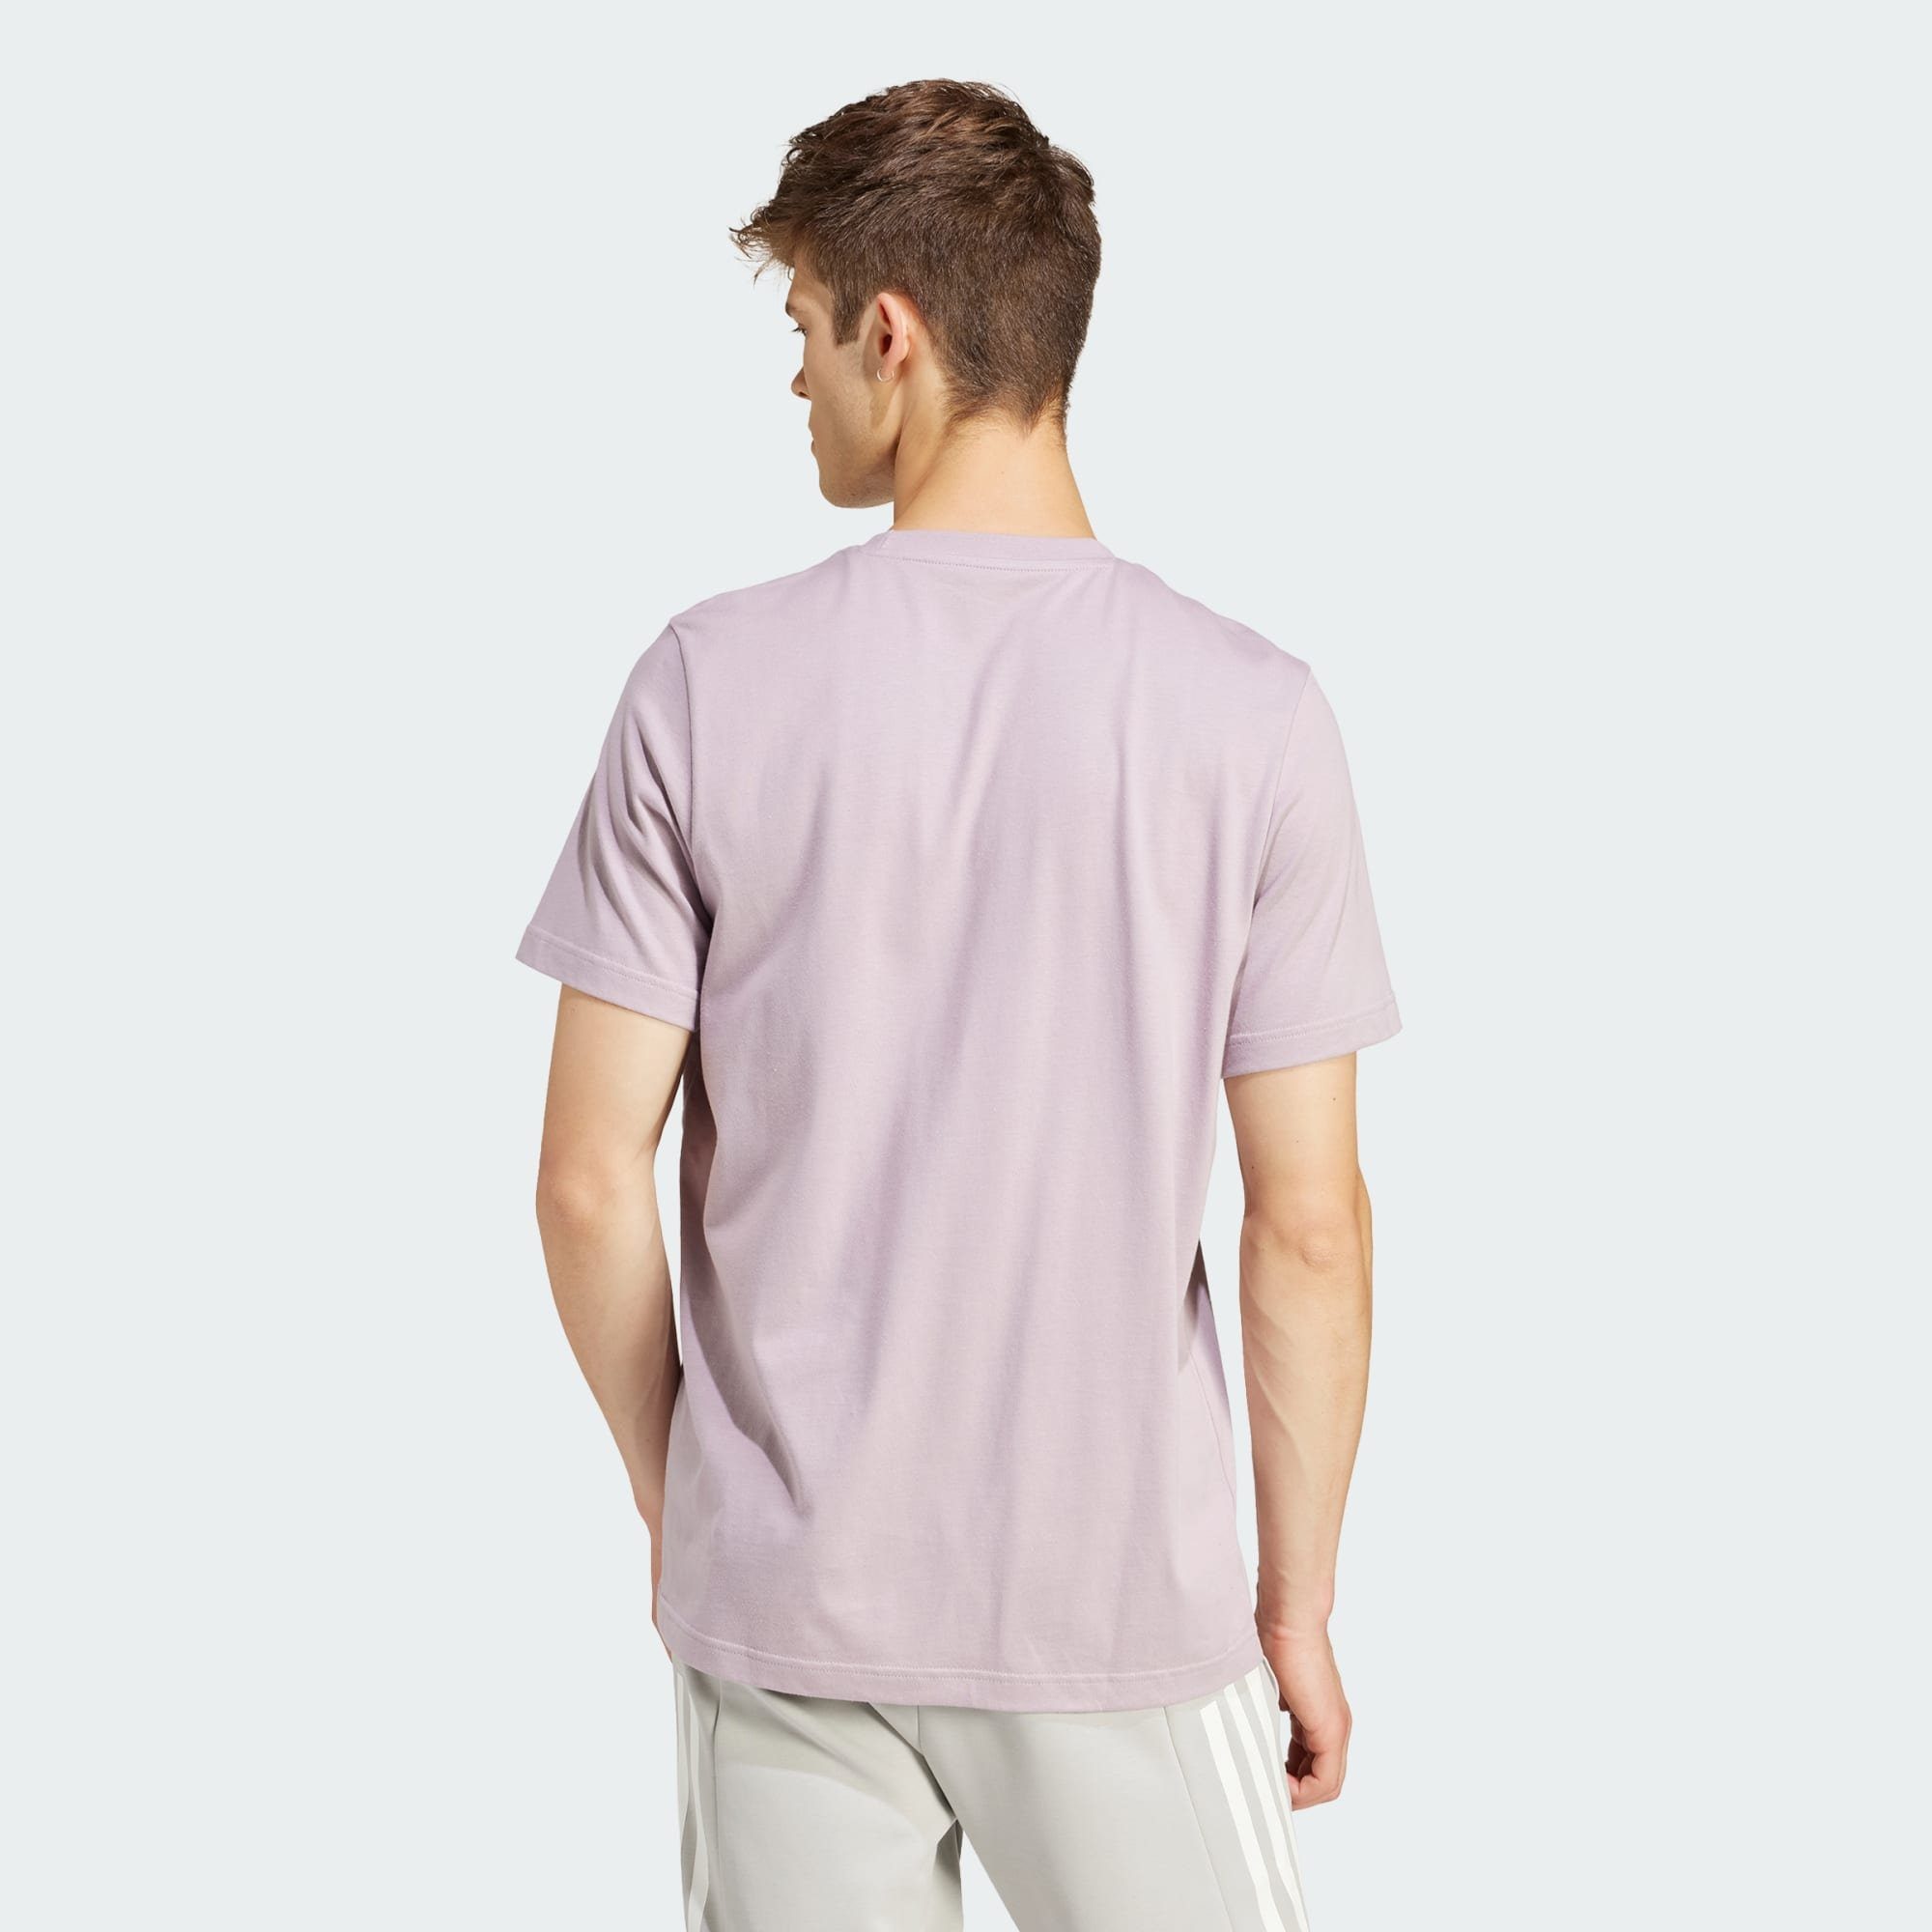 Preloved BADGE Fig GROWTH Sportswear GRAPHIC adidas T-SHIRT T-Shirt